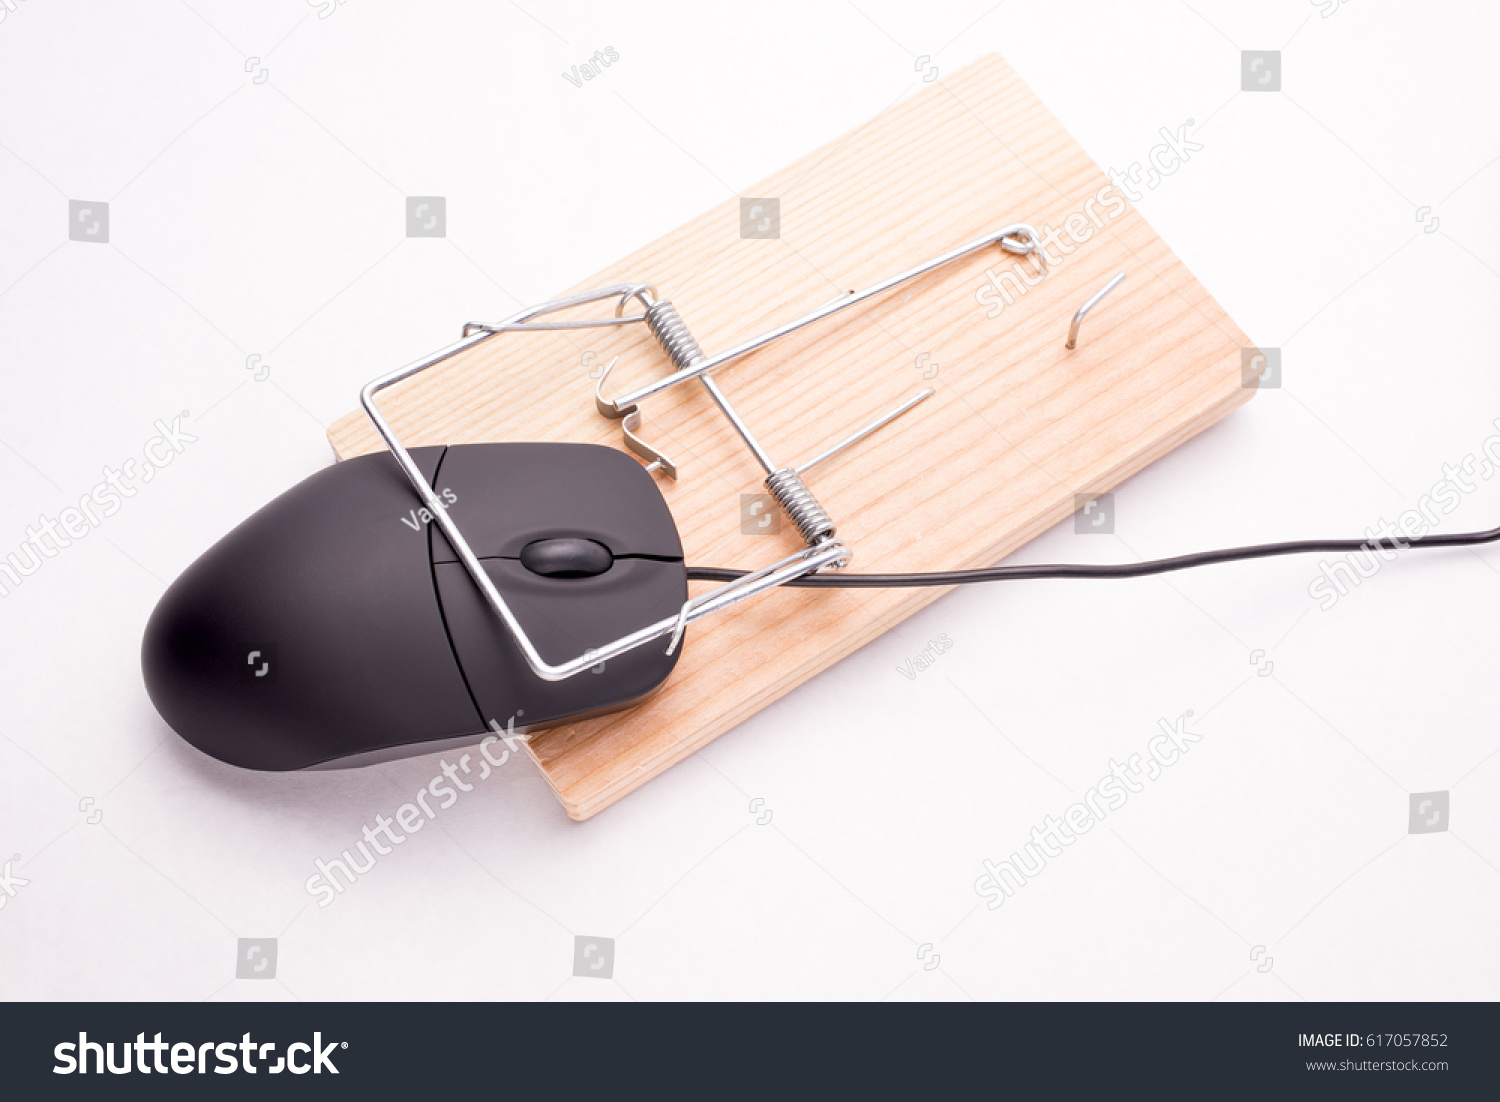 mouse trap device